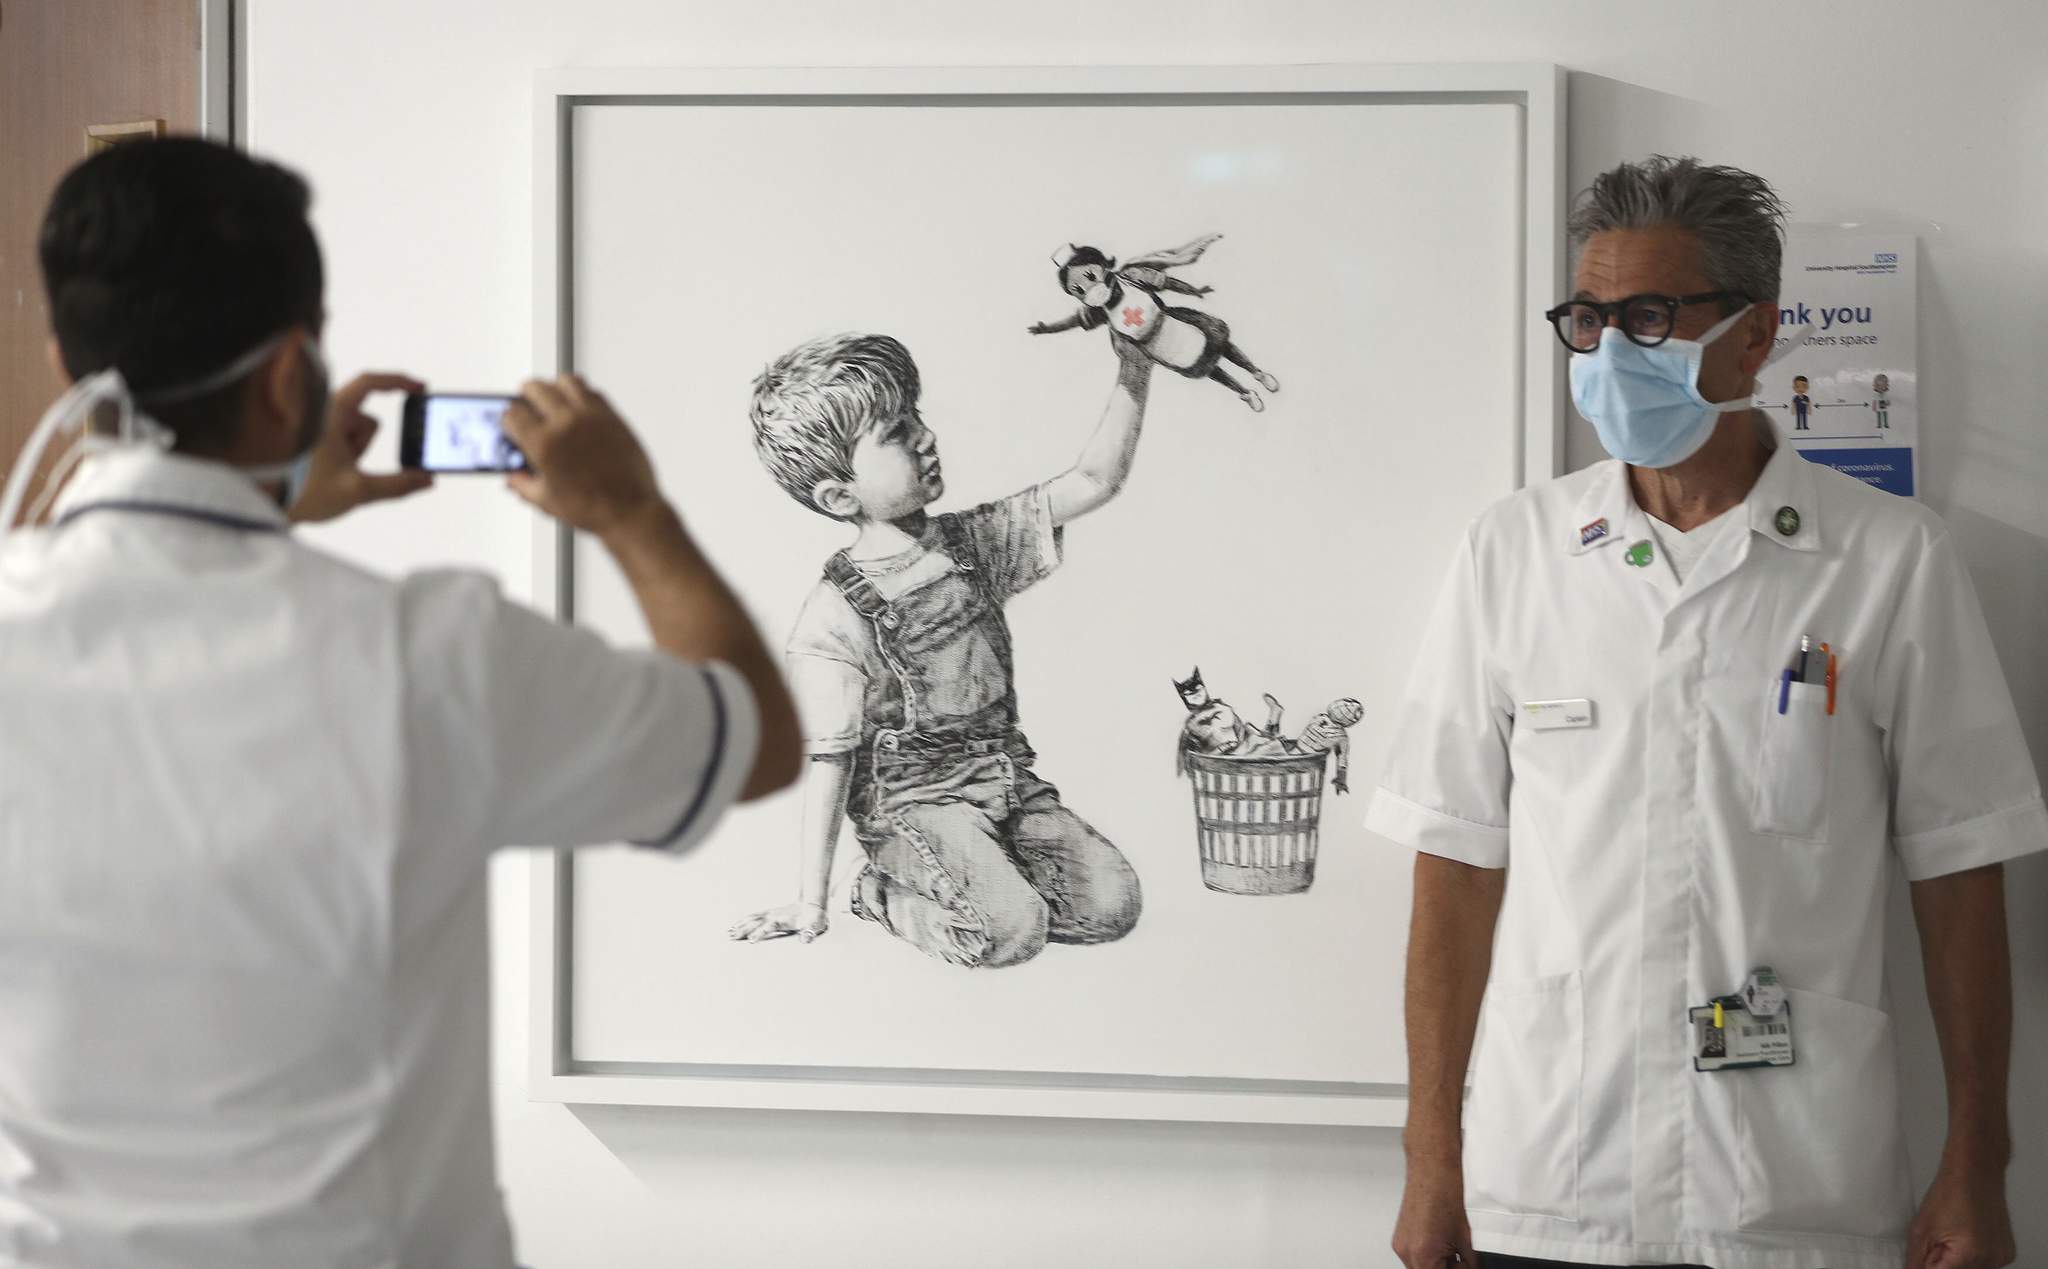 Banksy painting raises $23 million for UK health charities